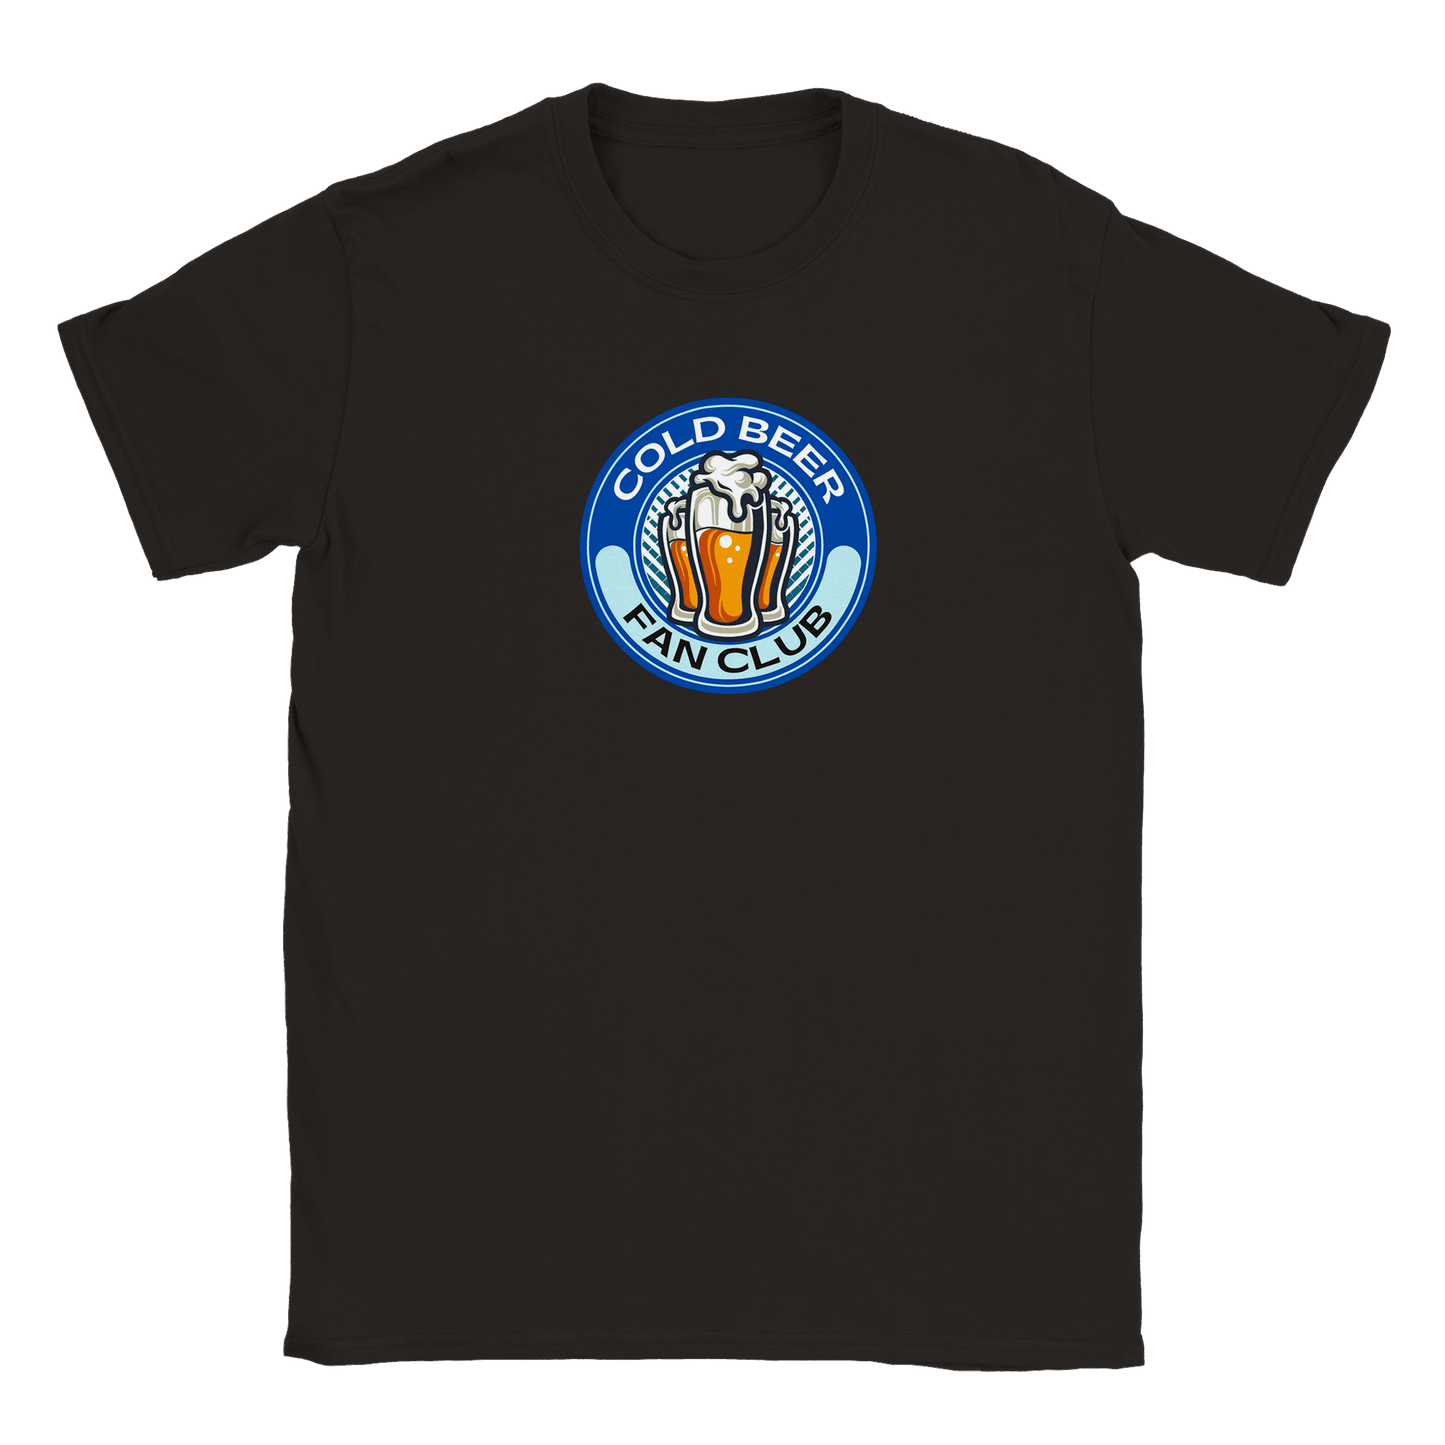 Cold Beer Fan Club - T-shirt Svart